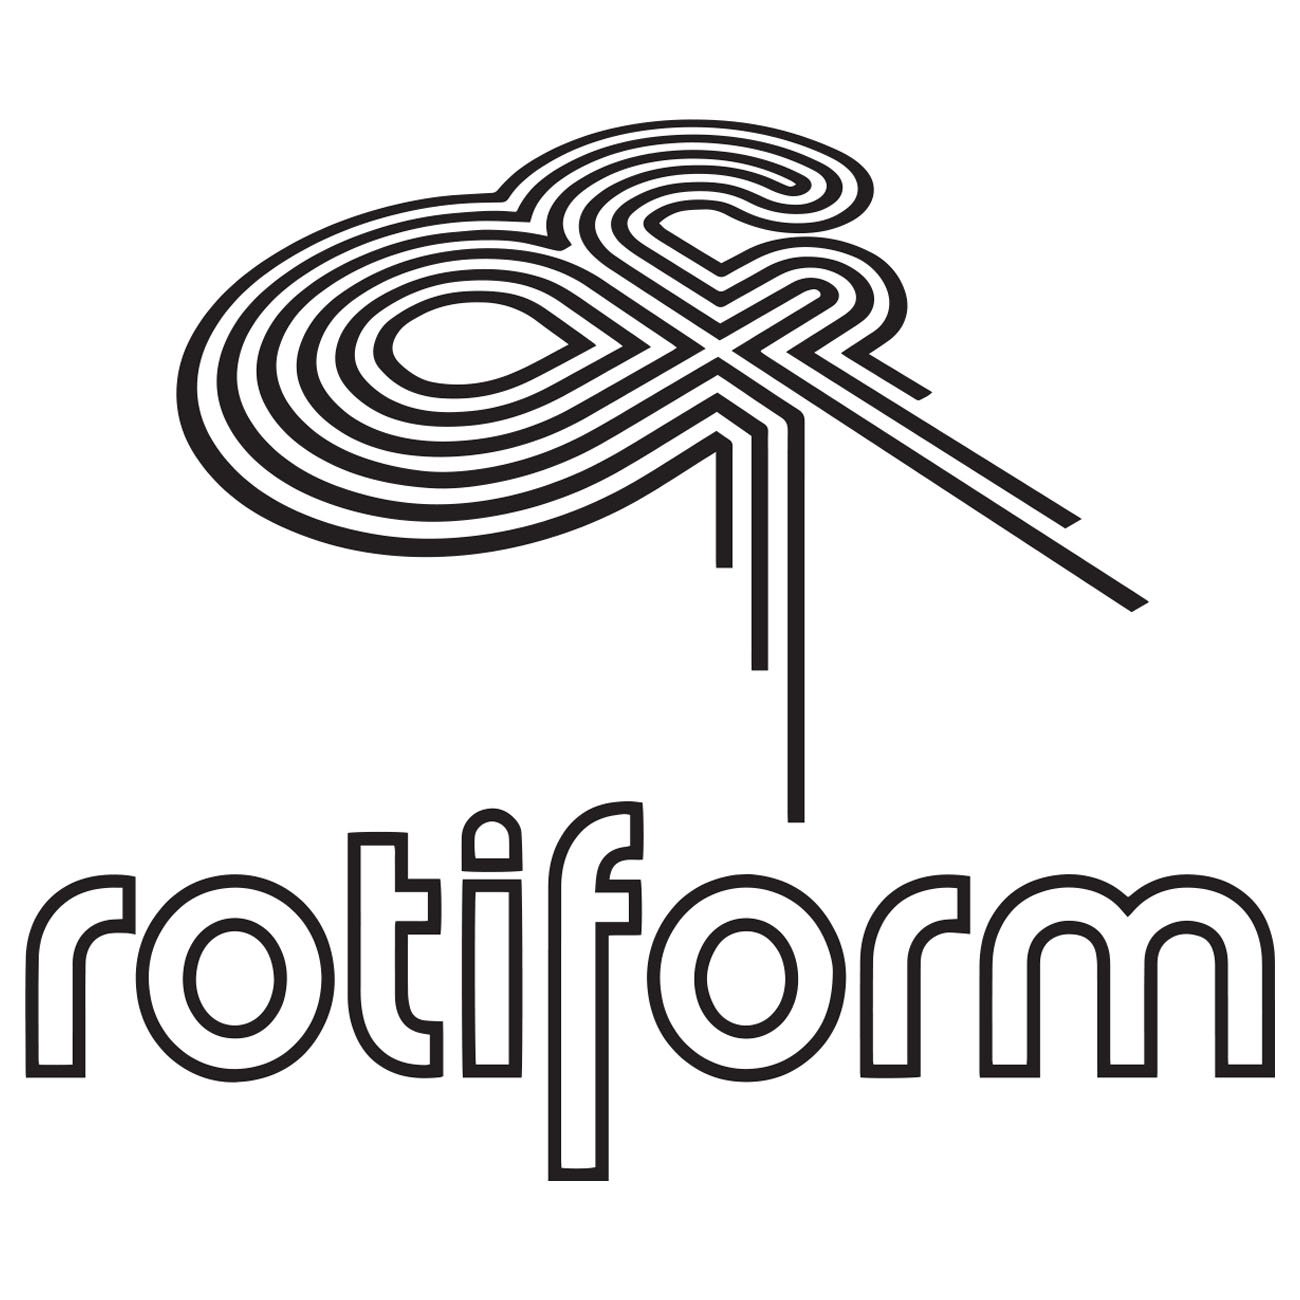 rotiform logo 2